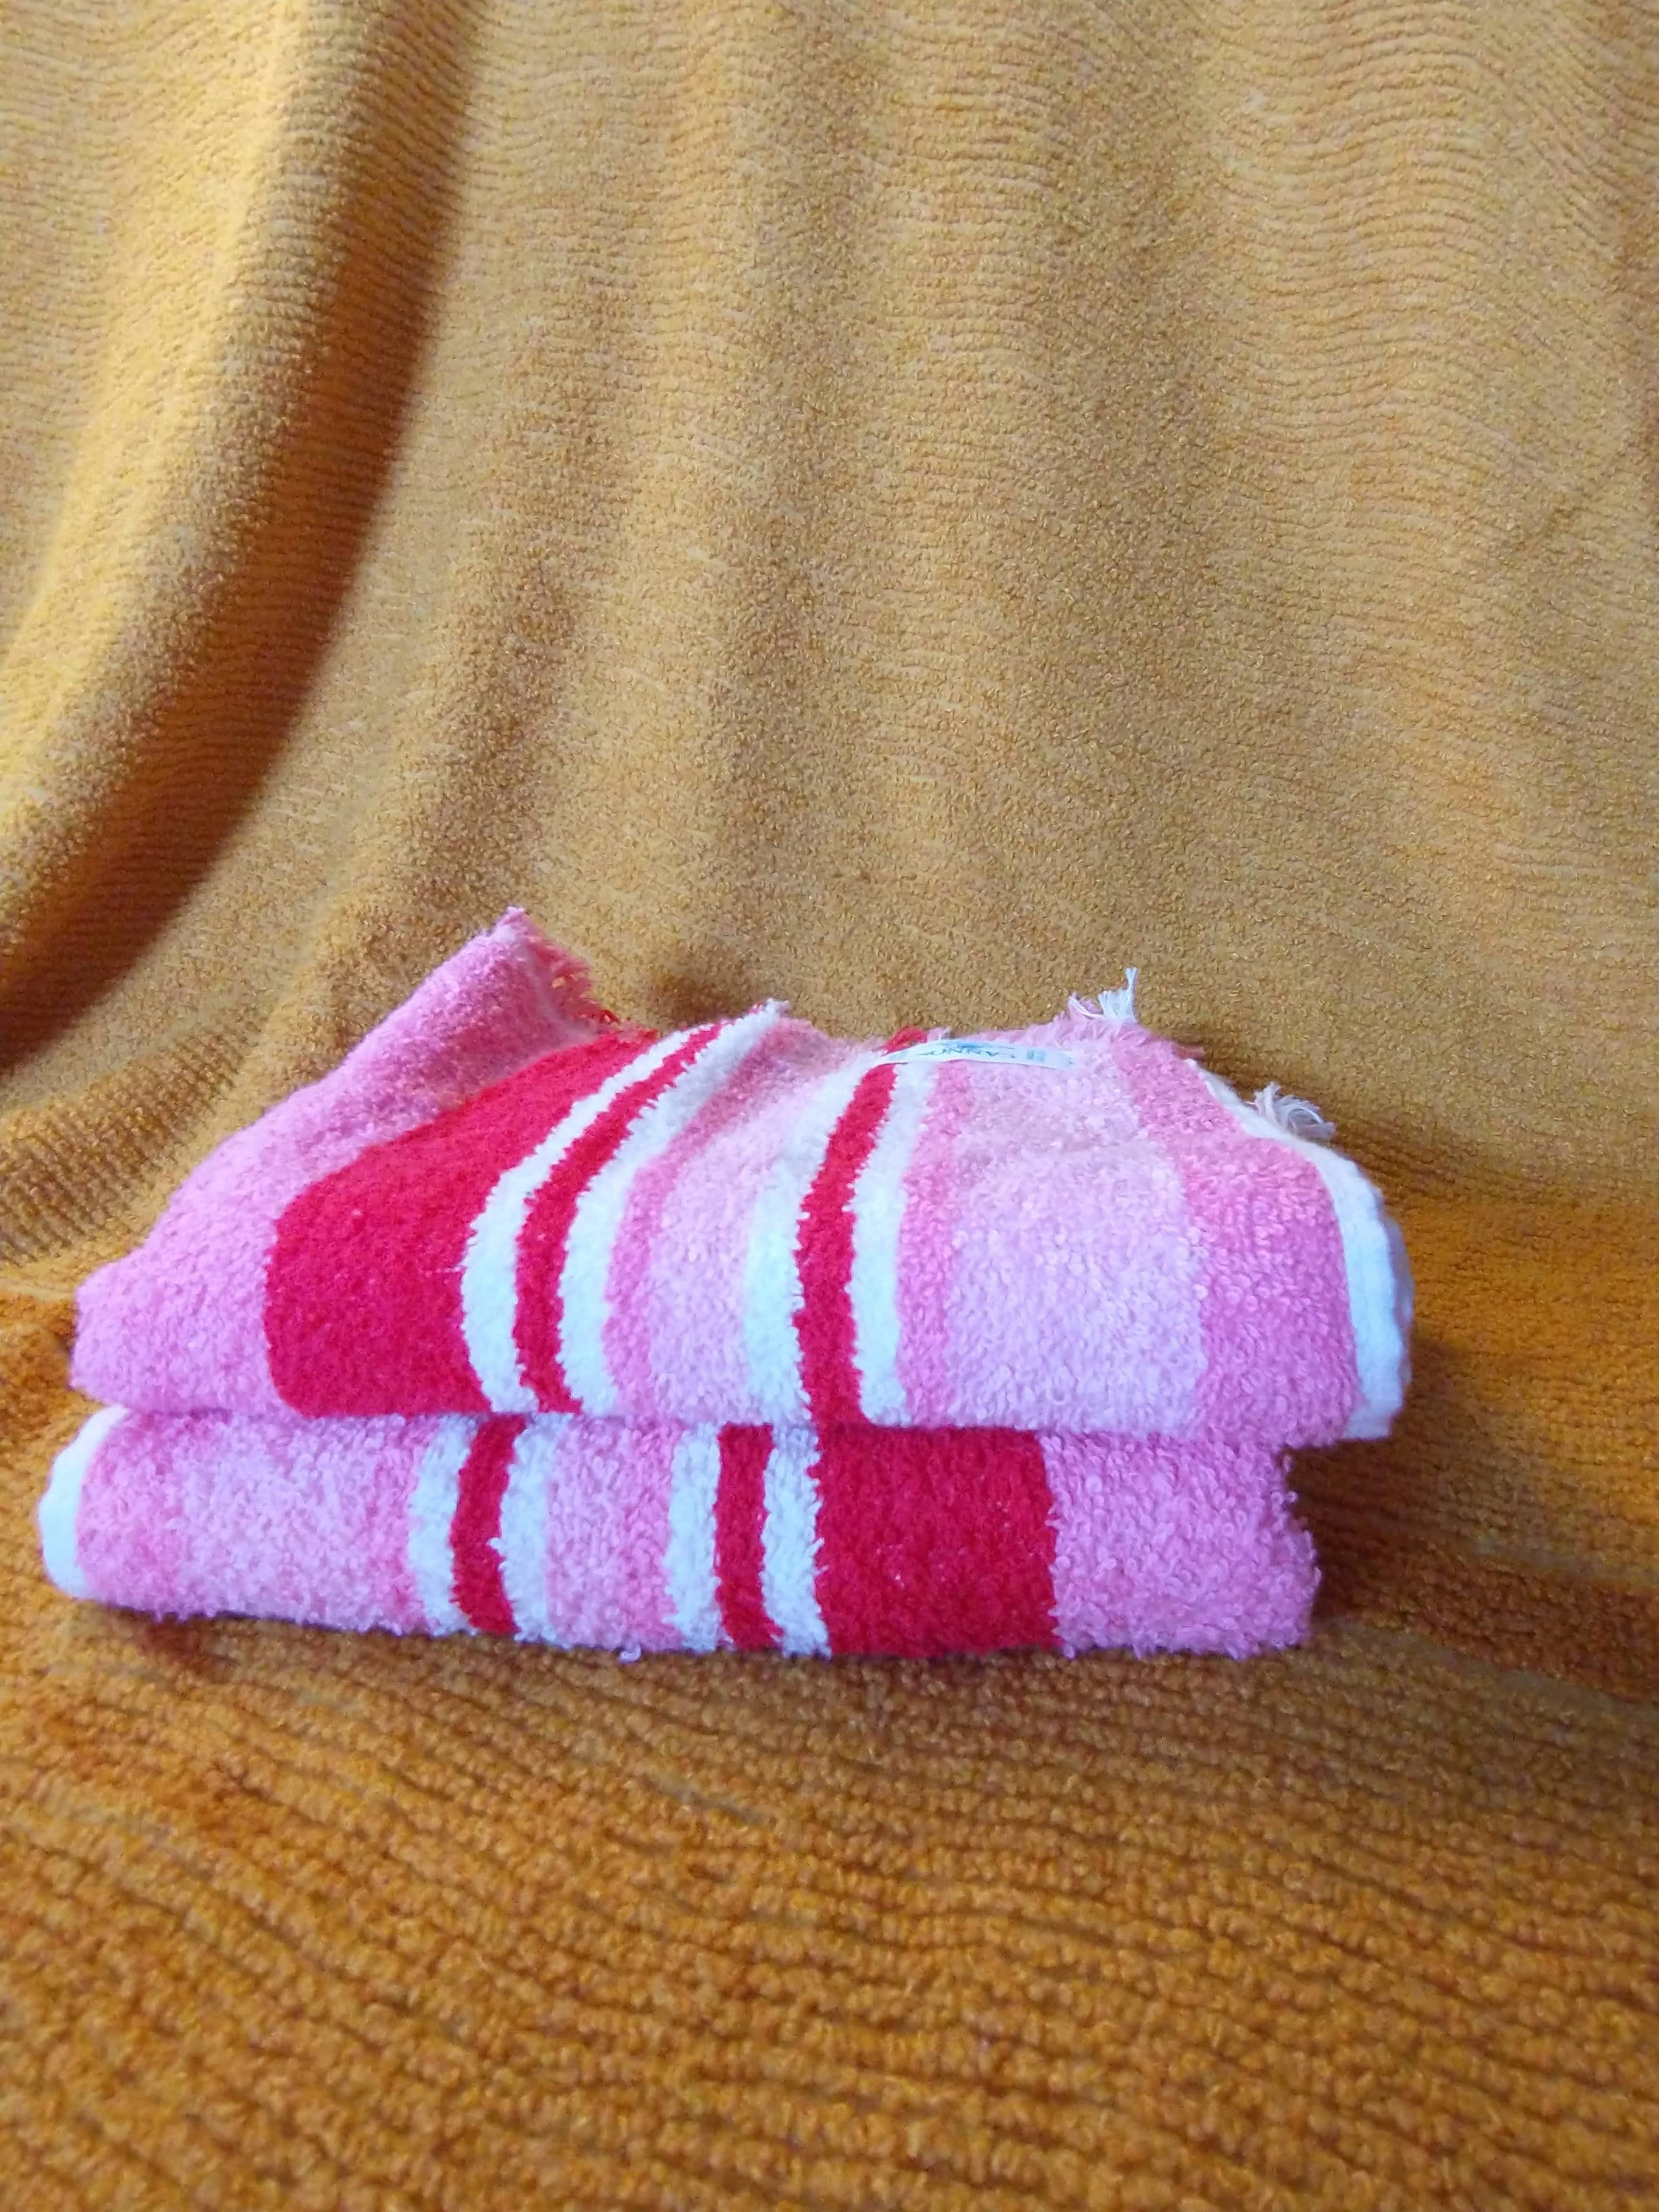 Southern Tide Breton Striped 2-Pack Bath Towels Pink